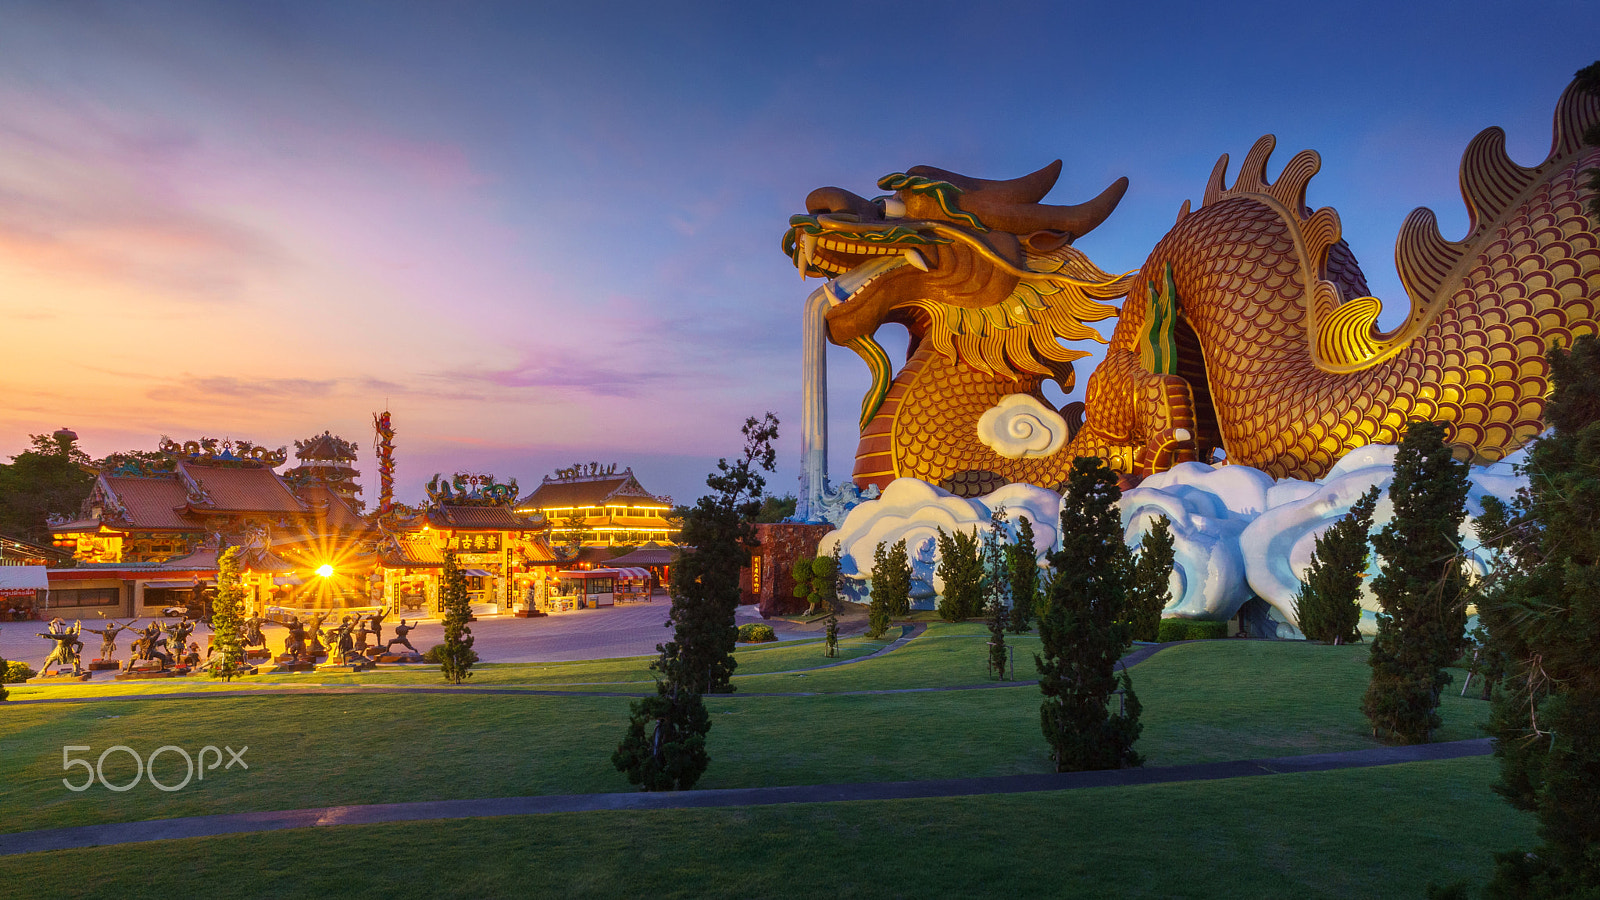 ZEISS Touit 12mm F2.8 sample photo. Giant dragon @ suphanburi, thailand photography